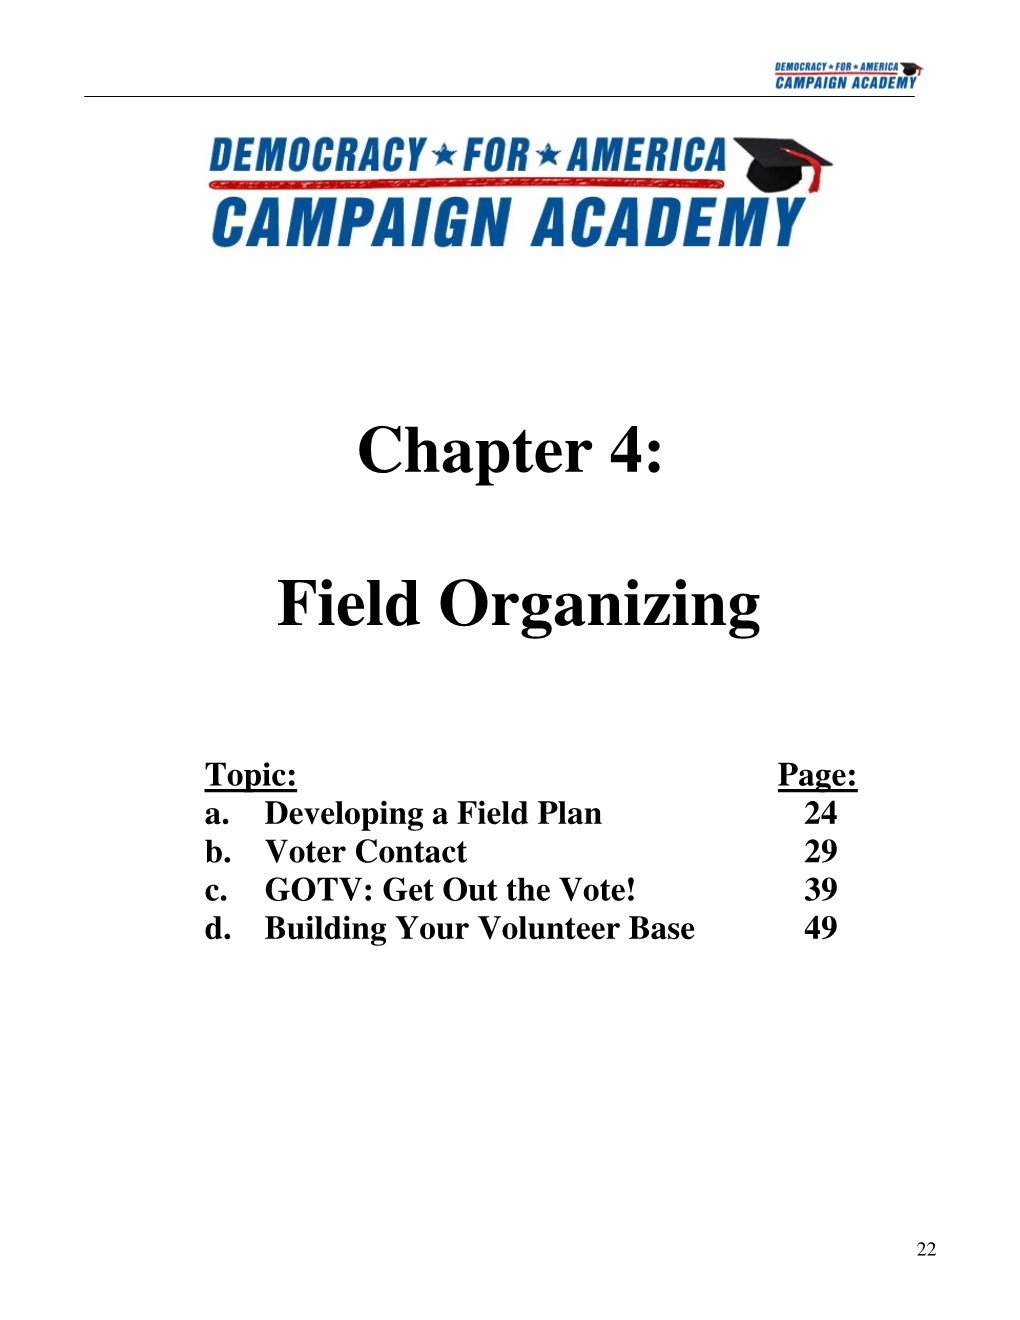 Field Organizing